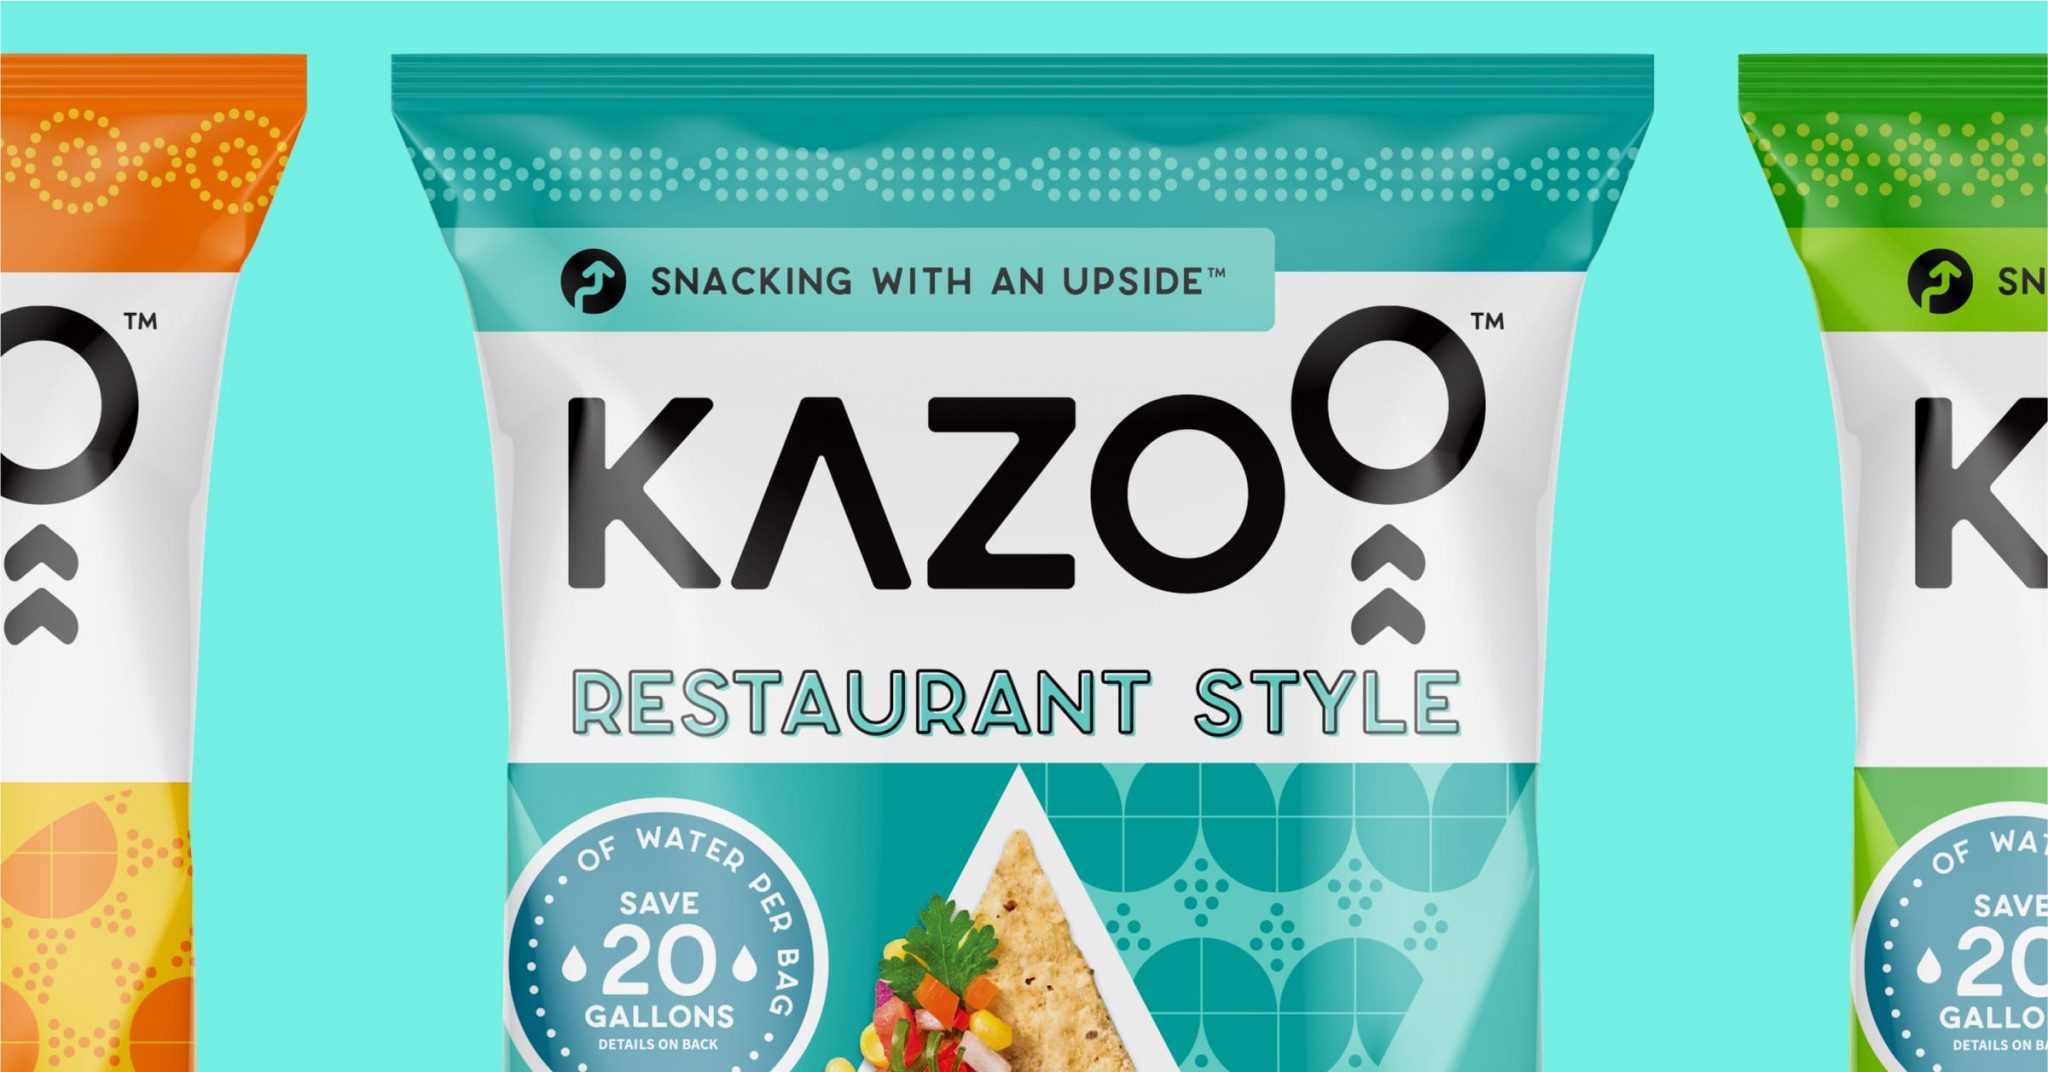 kazoo-snacks